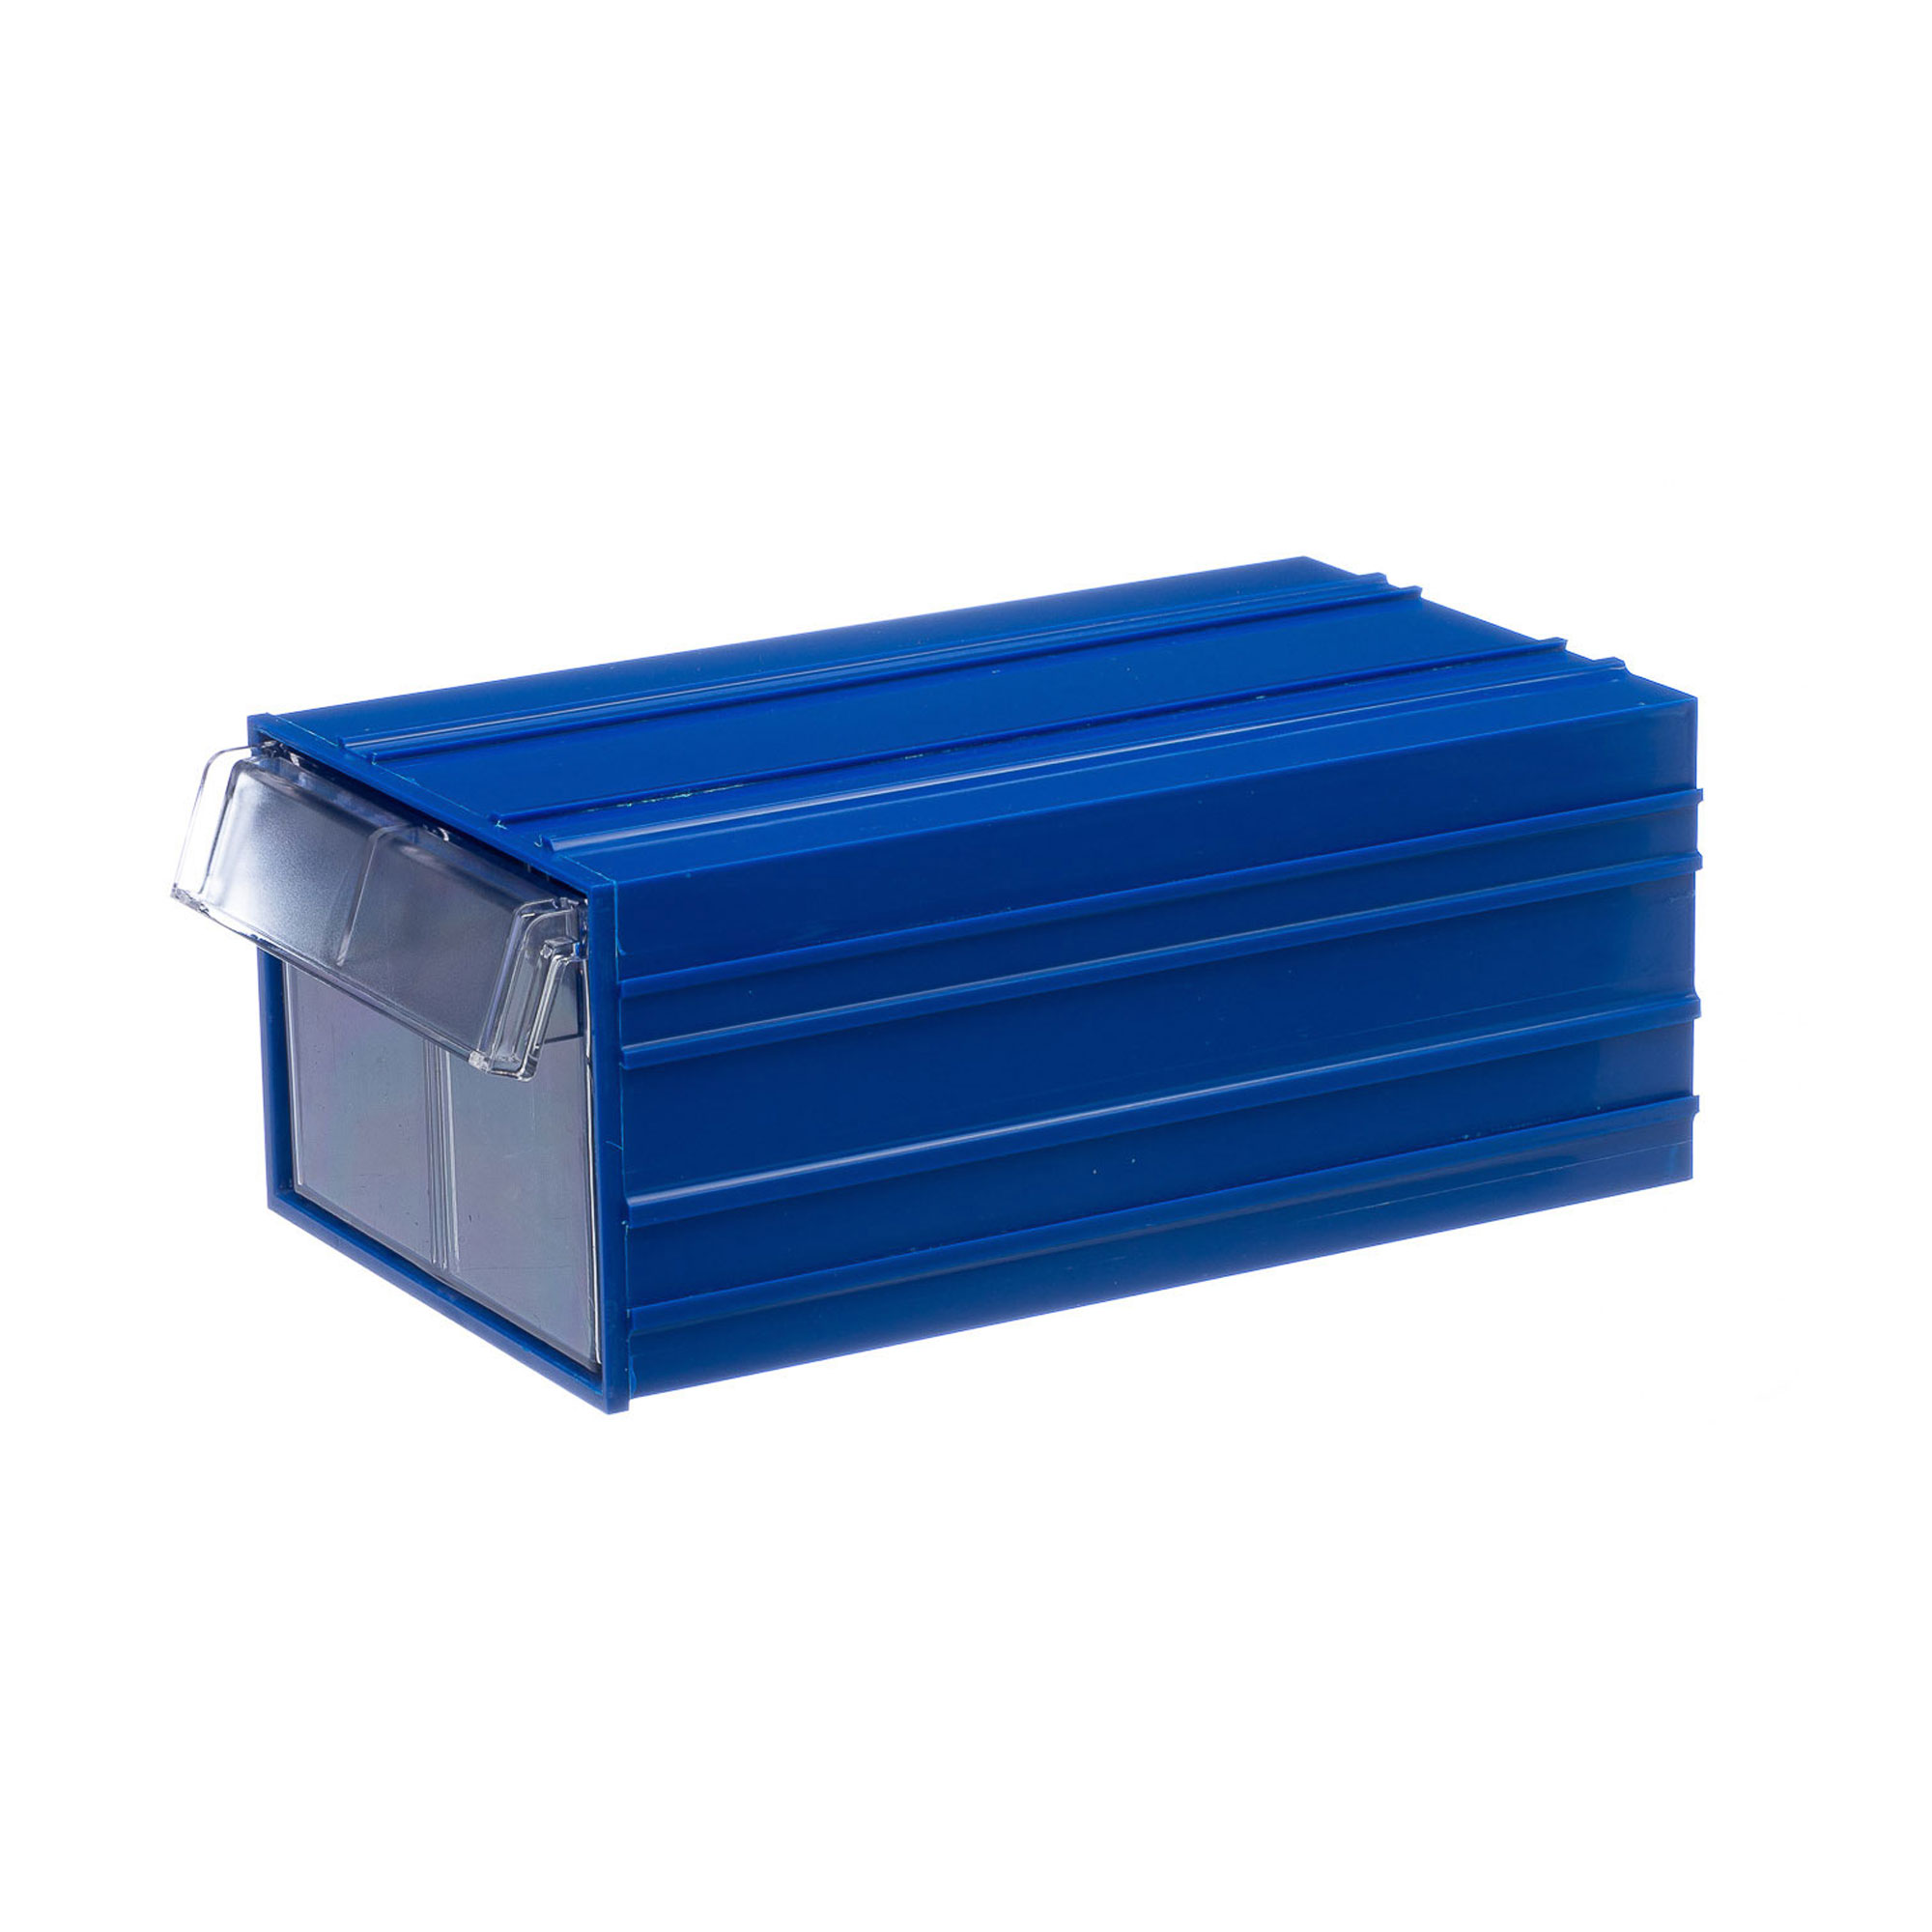 Пластиковый короб Стелла-техник С-2-синий-прозрачный 140х250х100мм пластиковый короб стелла техник c 2 к6 синий белый 140х250х100мм комплект 6 штук